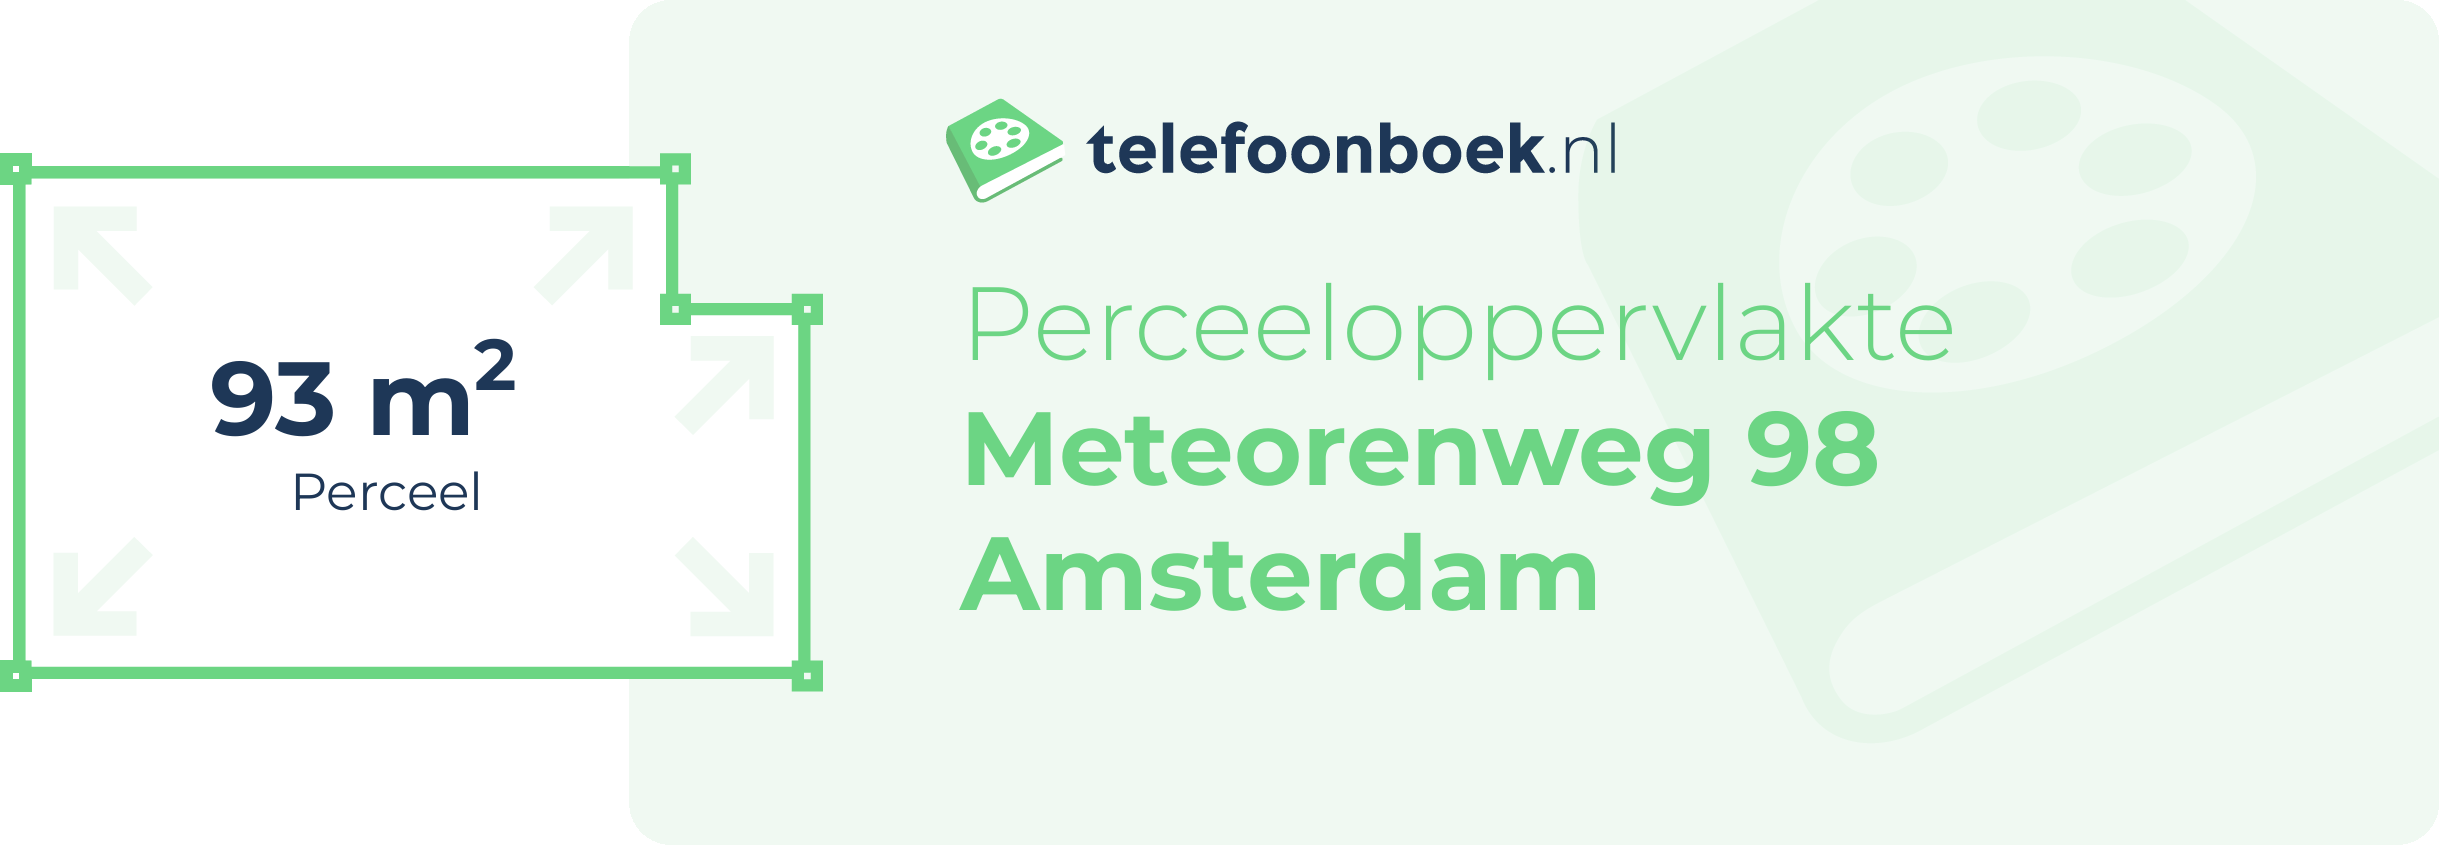 Perceeloppervlakte Meteorenweg 98 Amsterdam